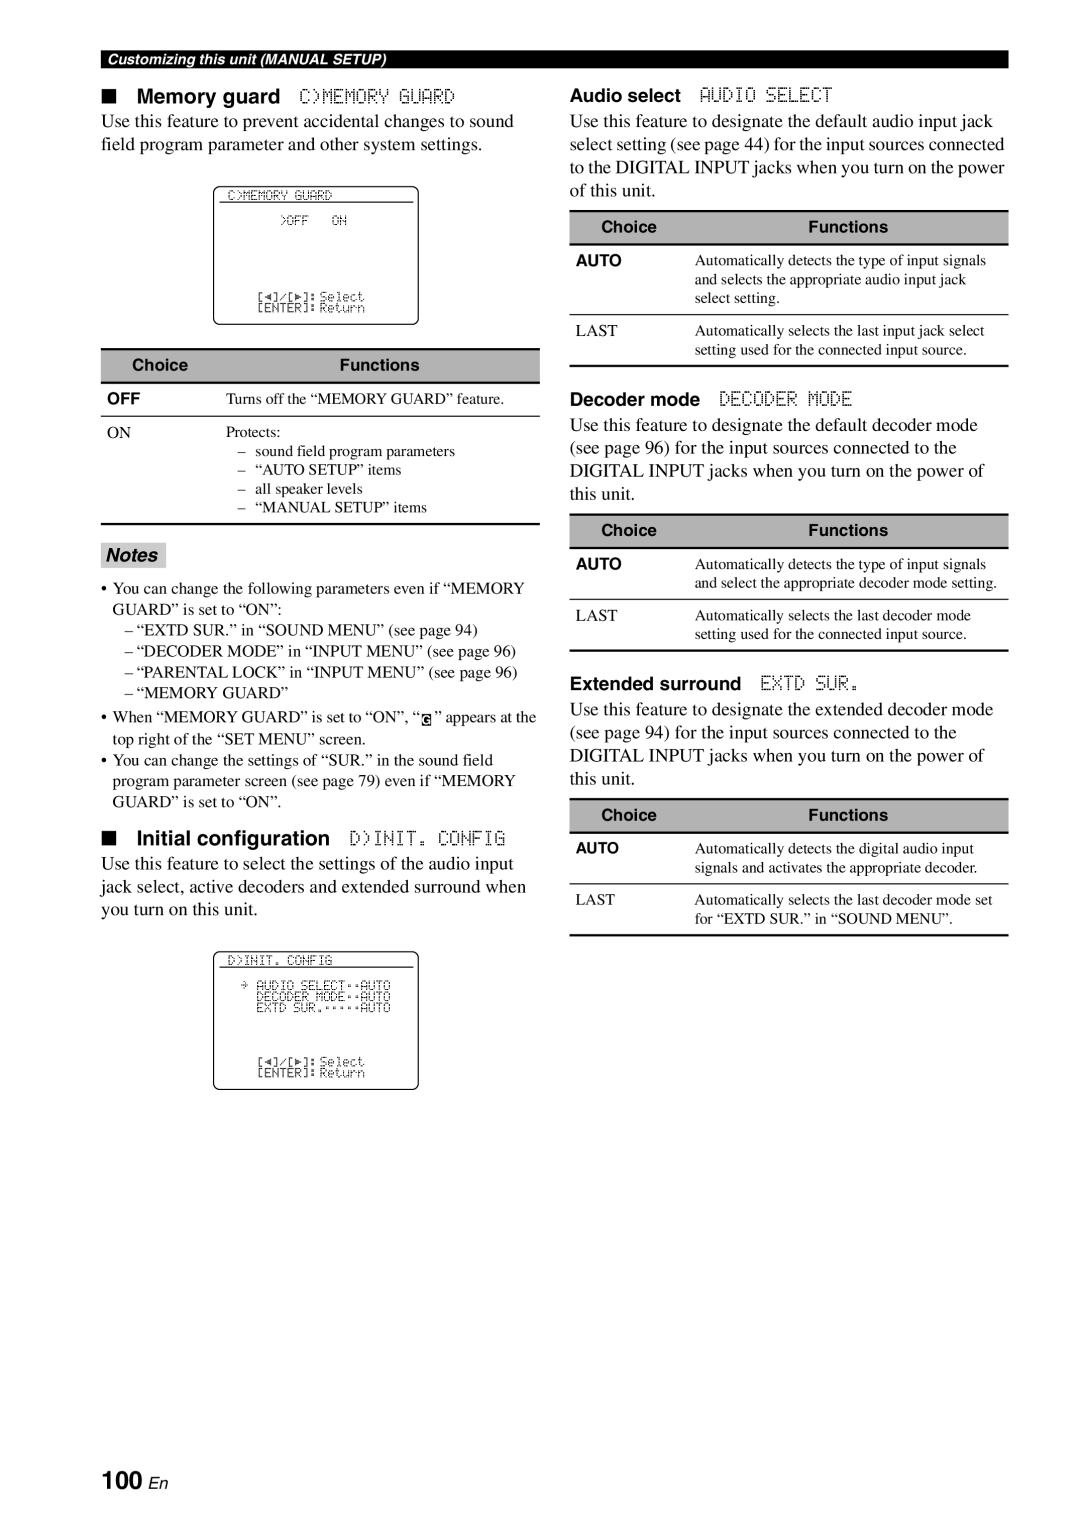 Yamaha RX-V863 owner manual 100 En, Initial configuration DINIT. CONFIG, Notes 